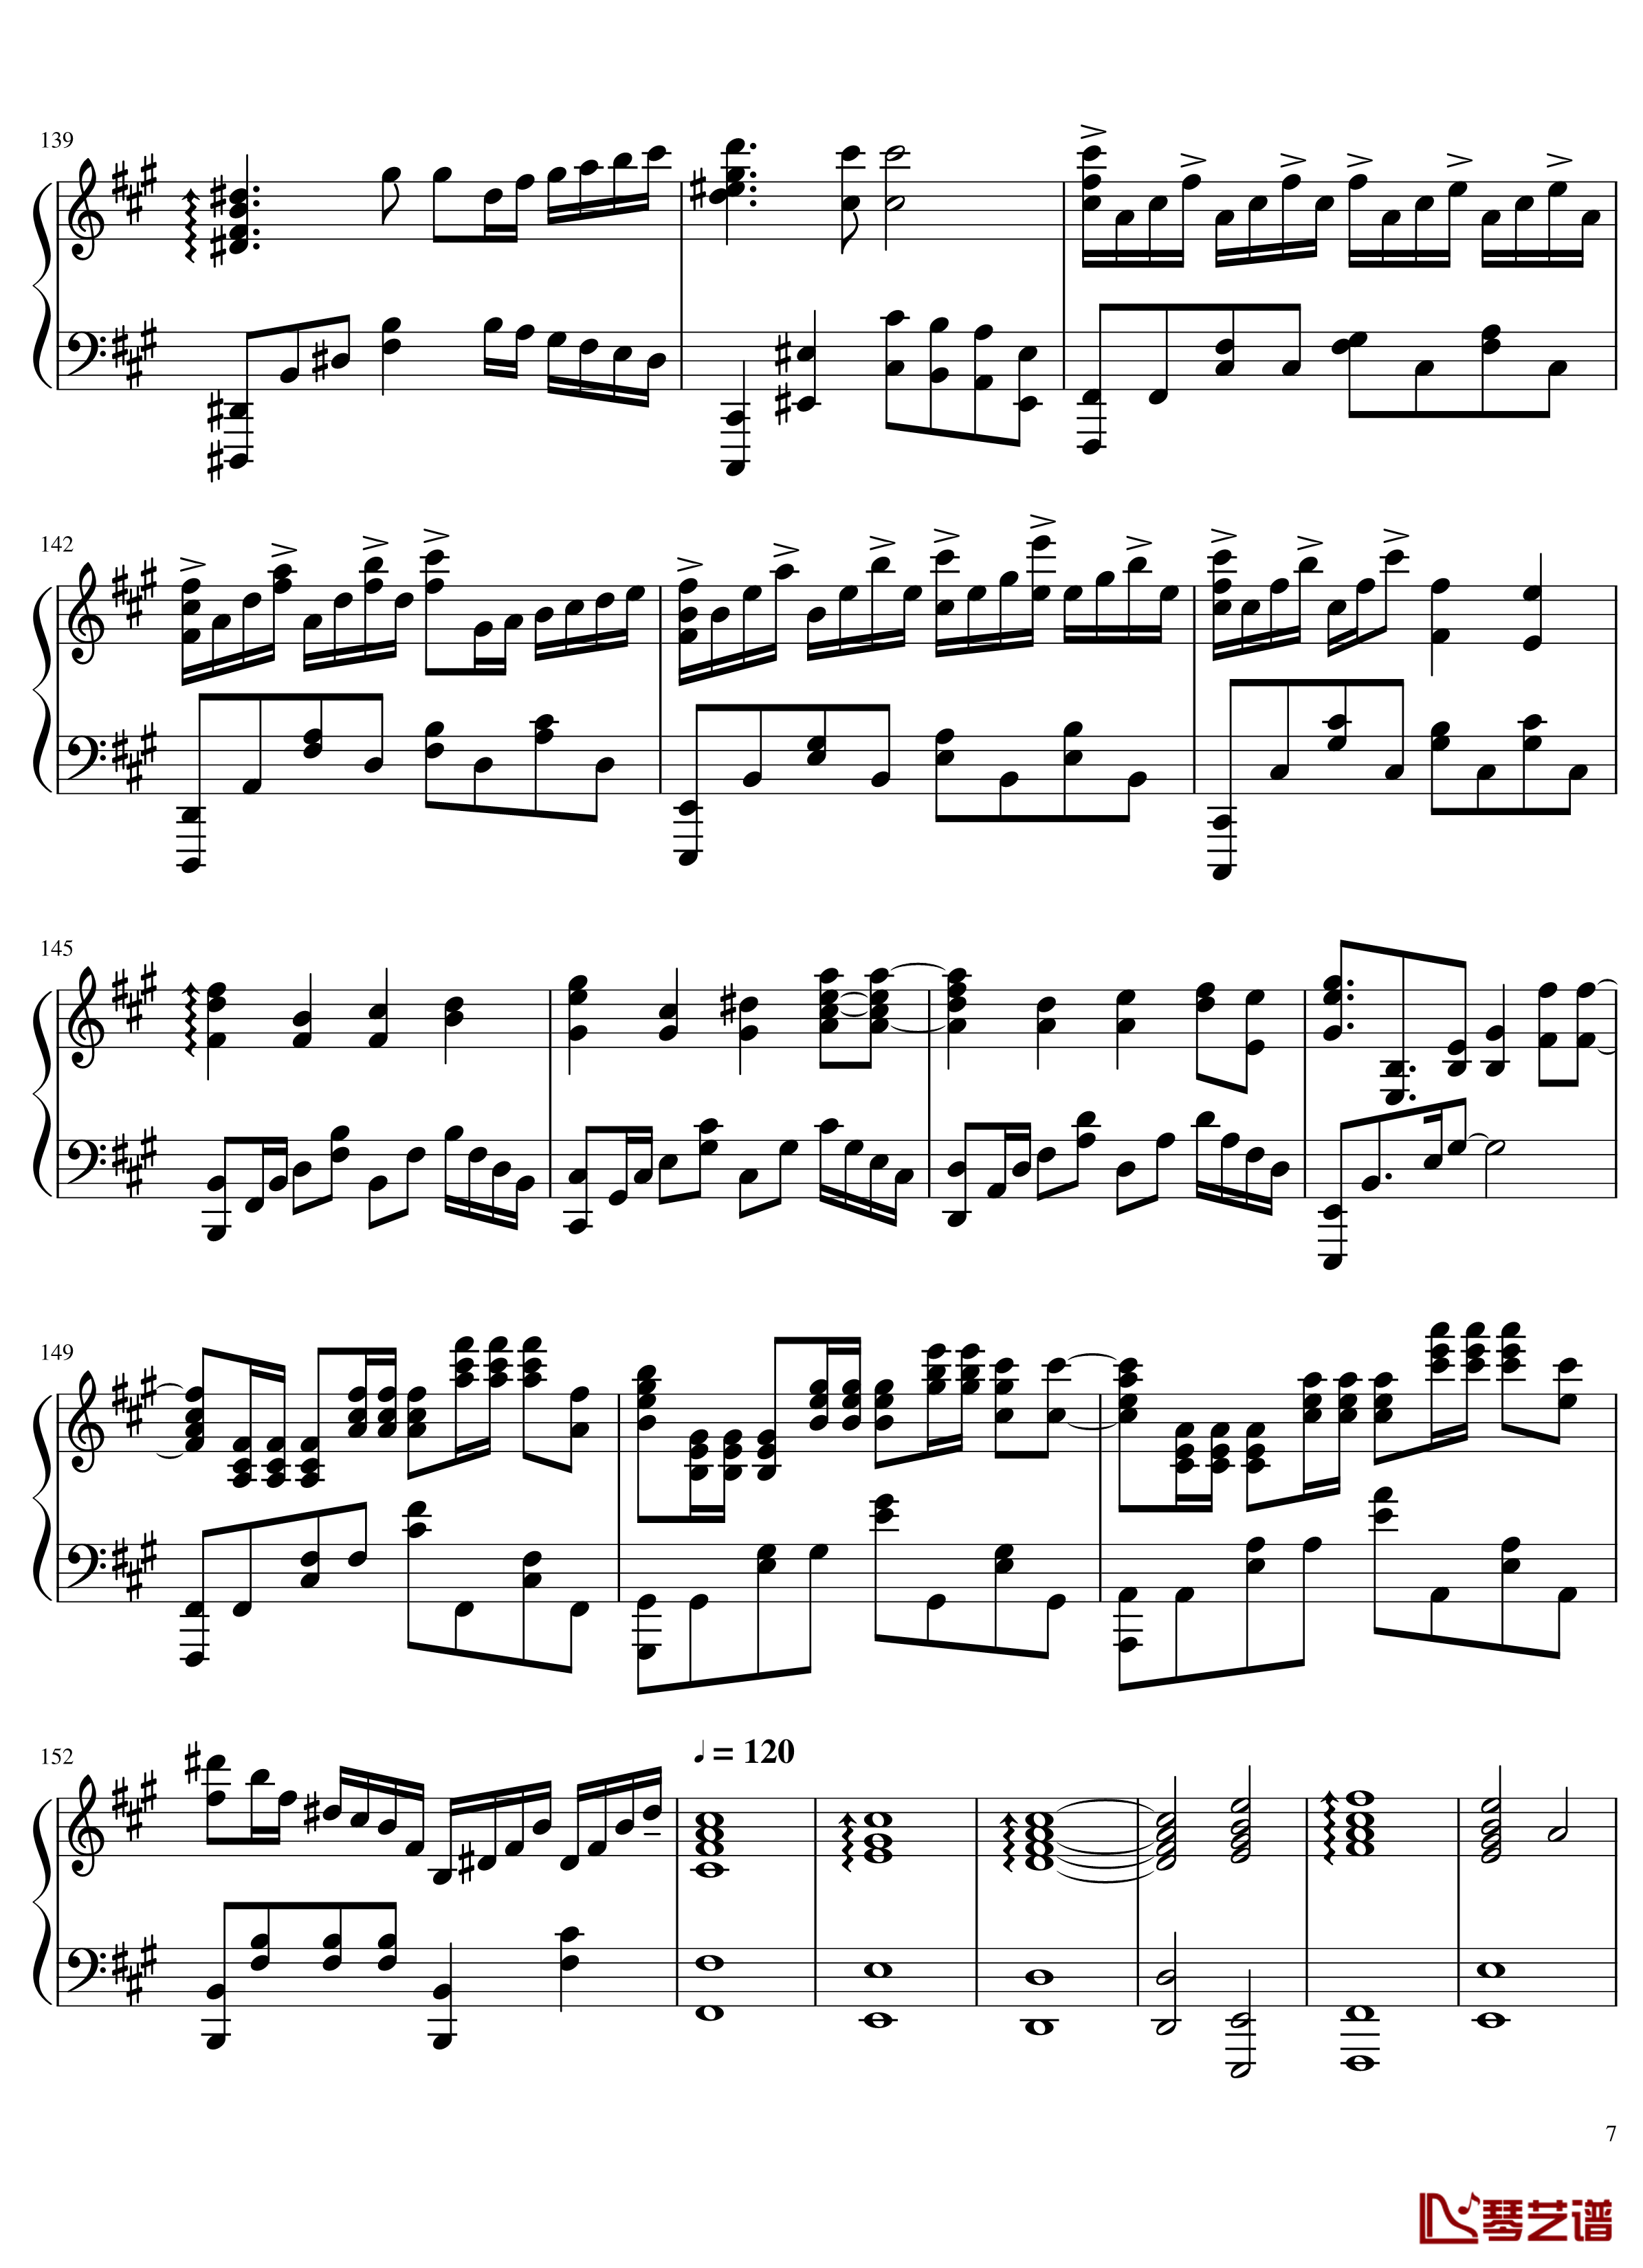 There is a reason钢琴谱-nogamenolife7